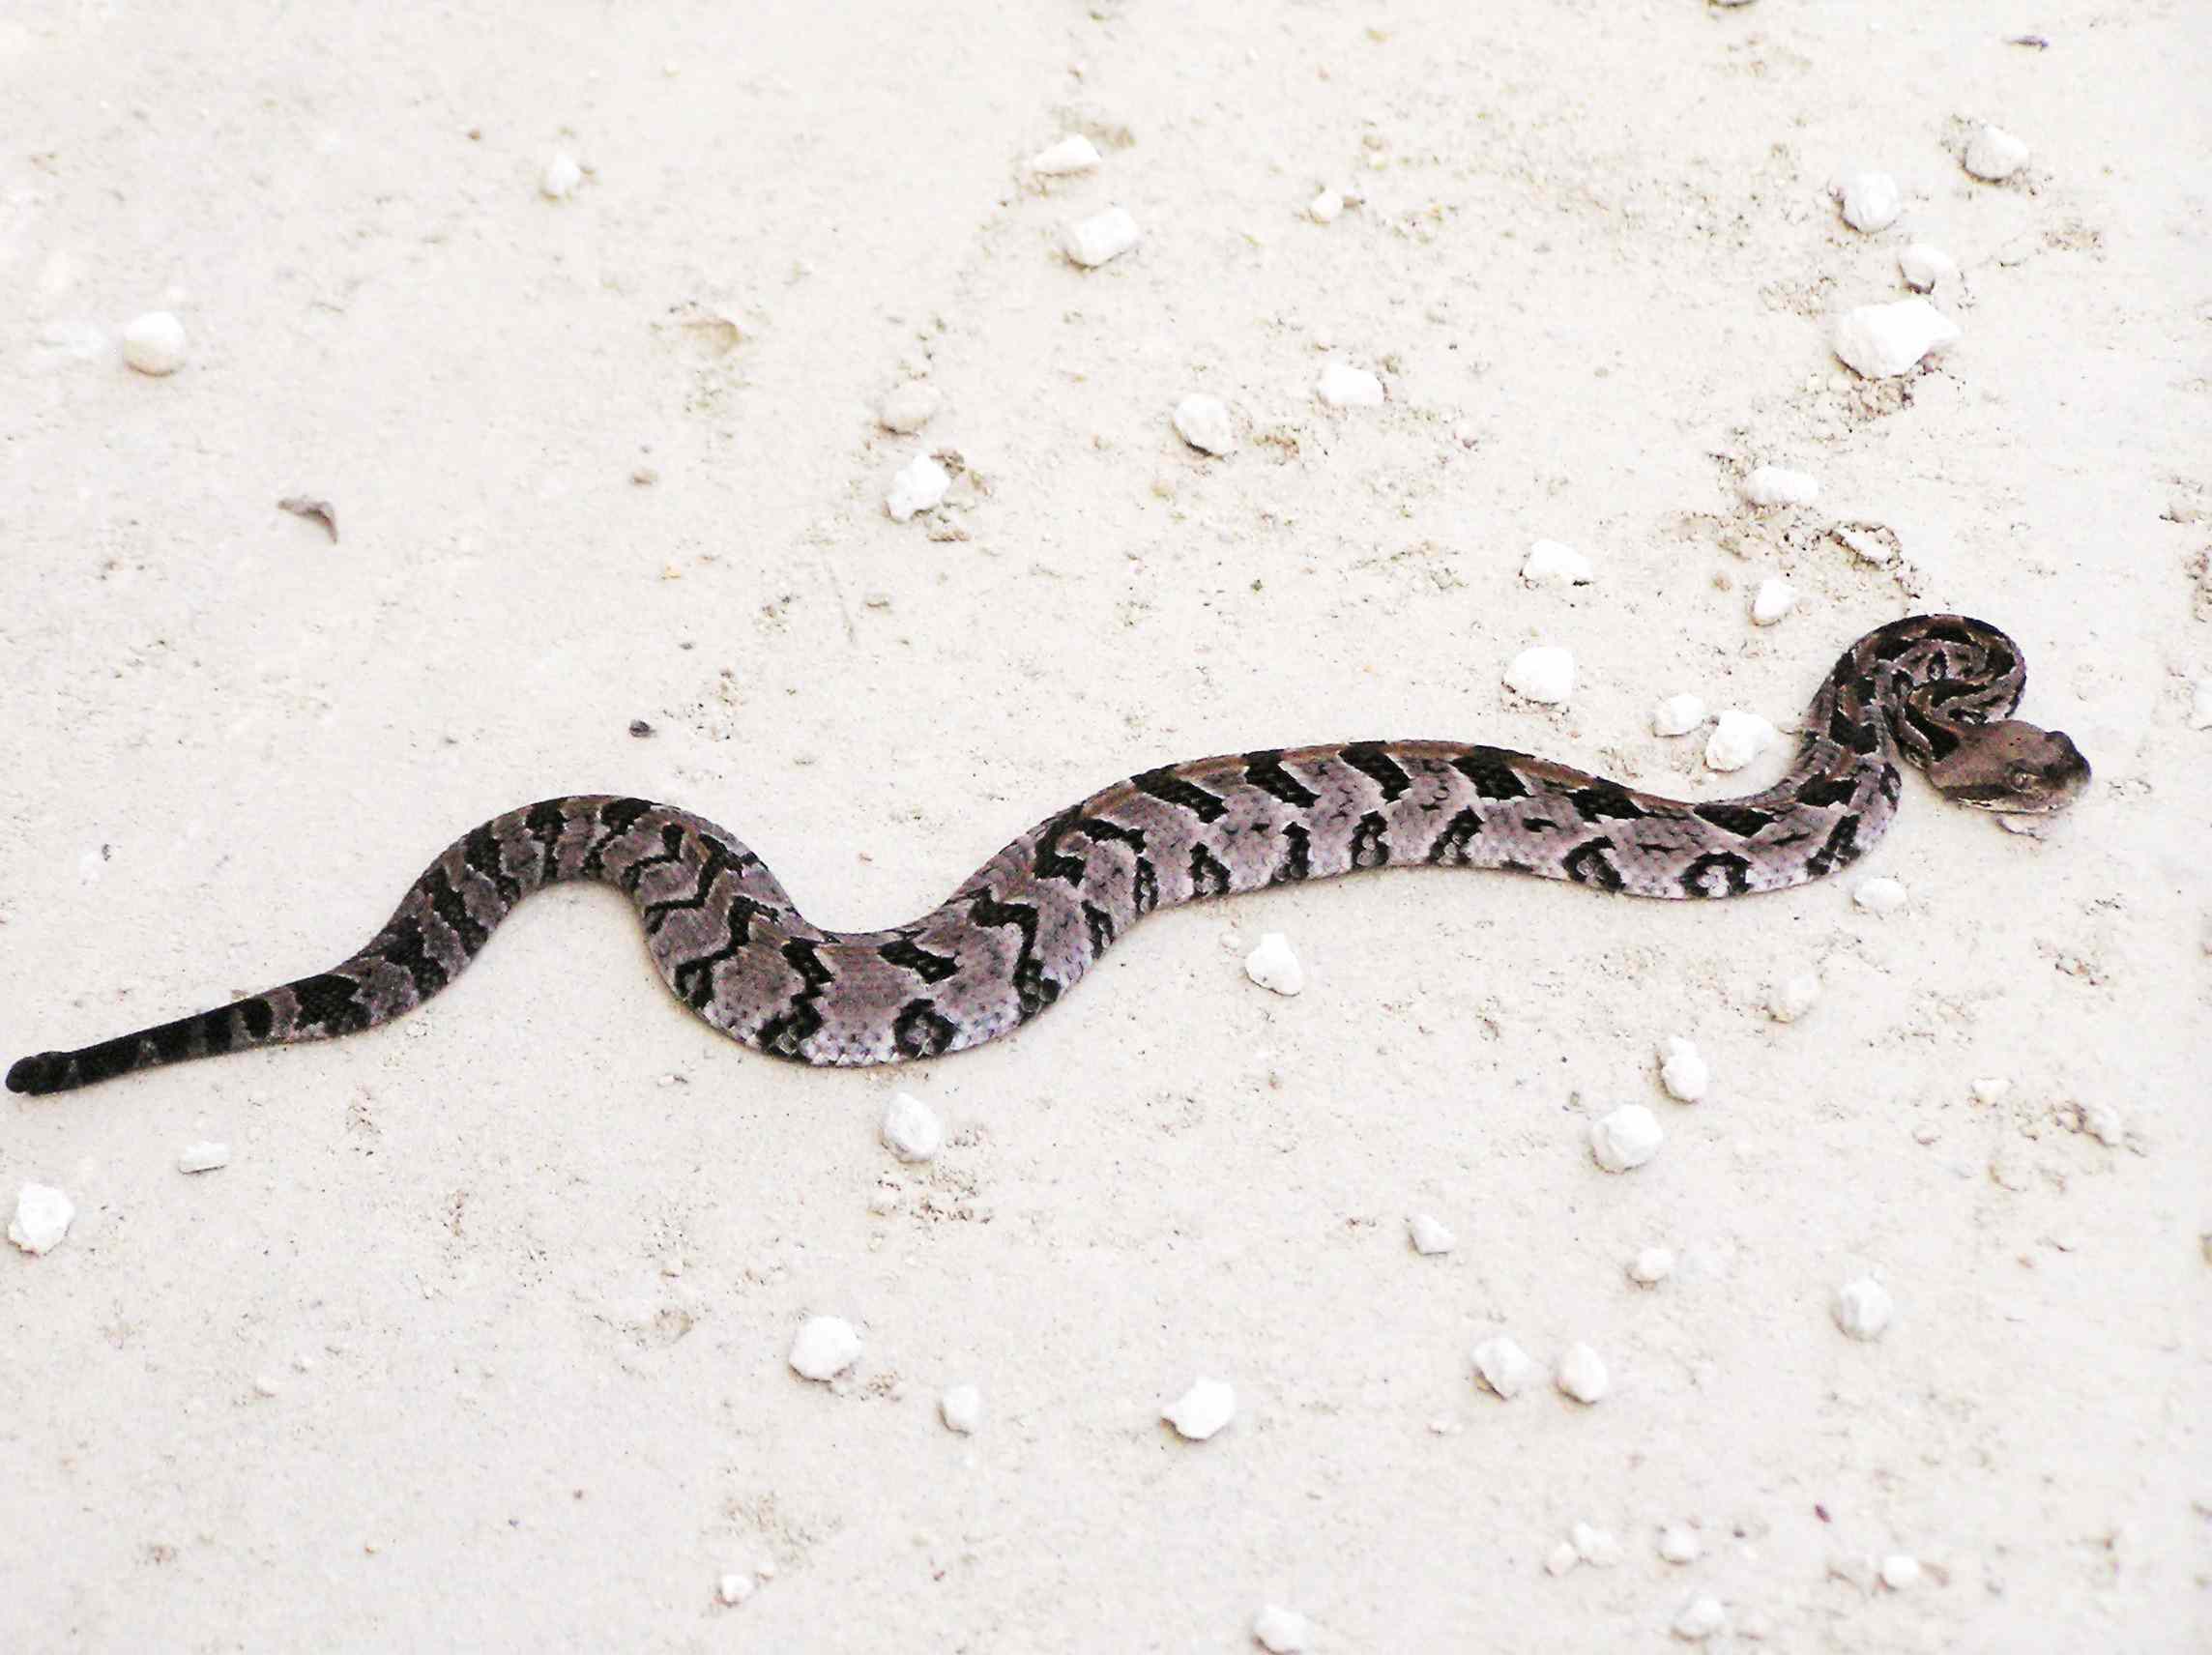 Young rattlesnake image download